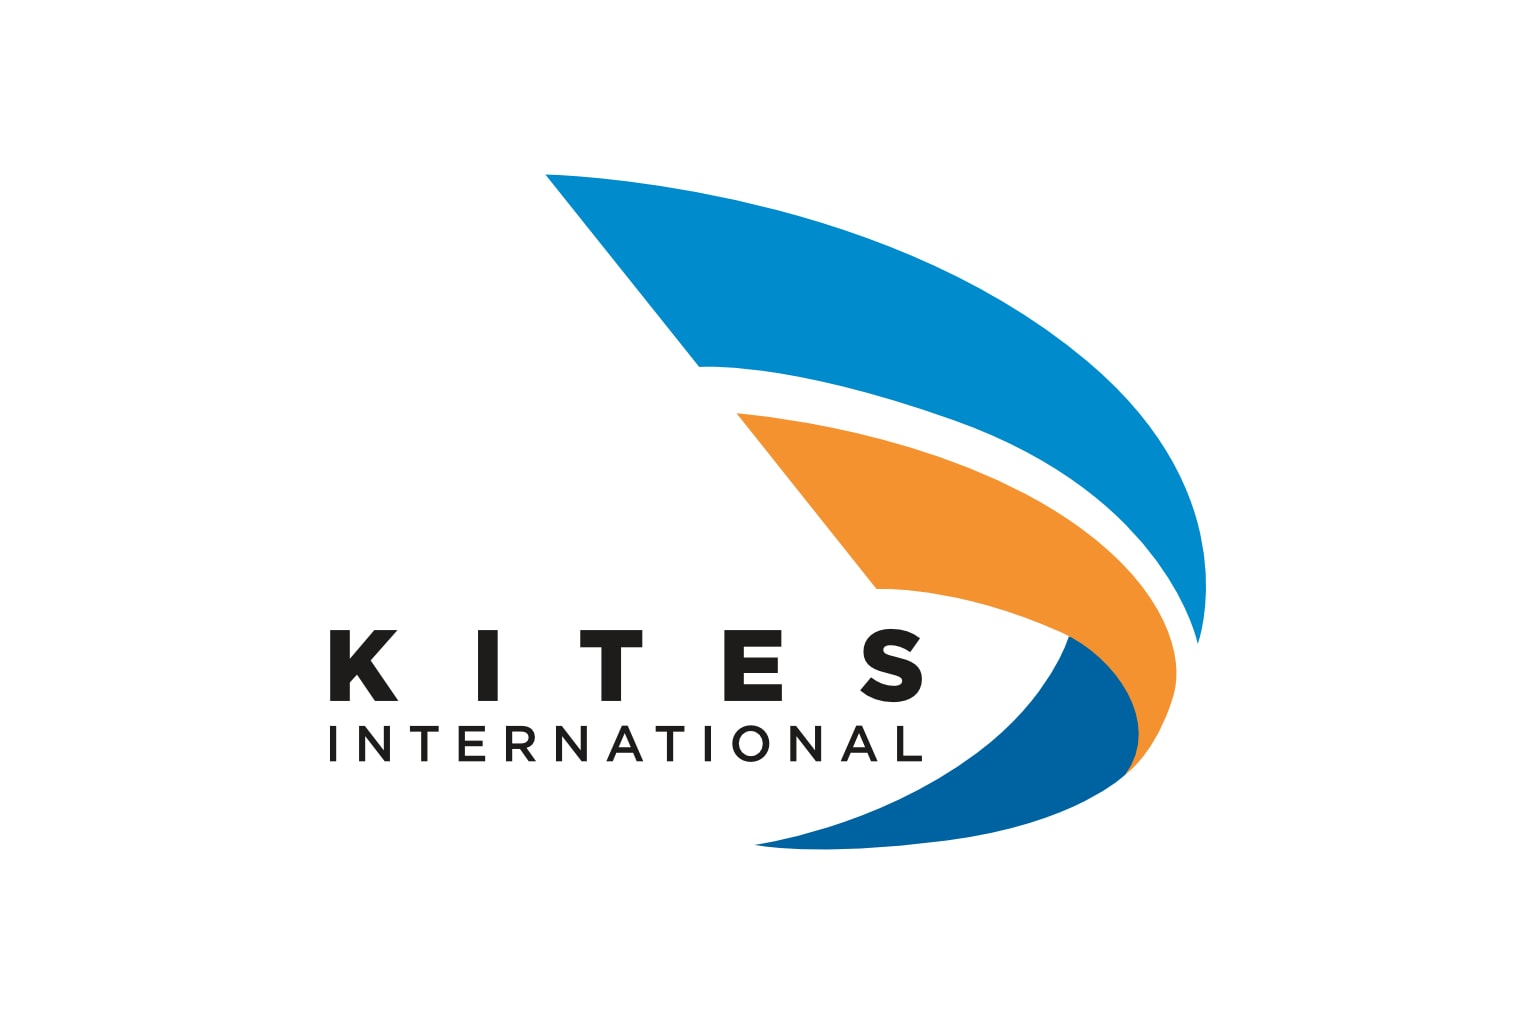 Kites International